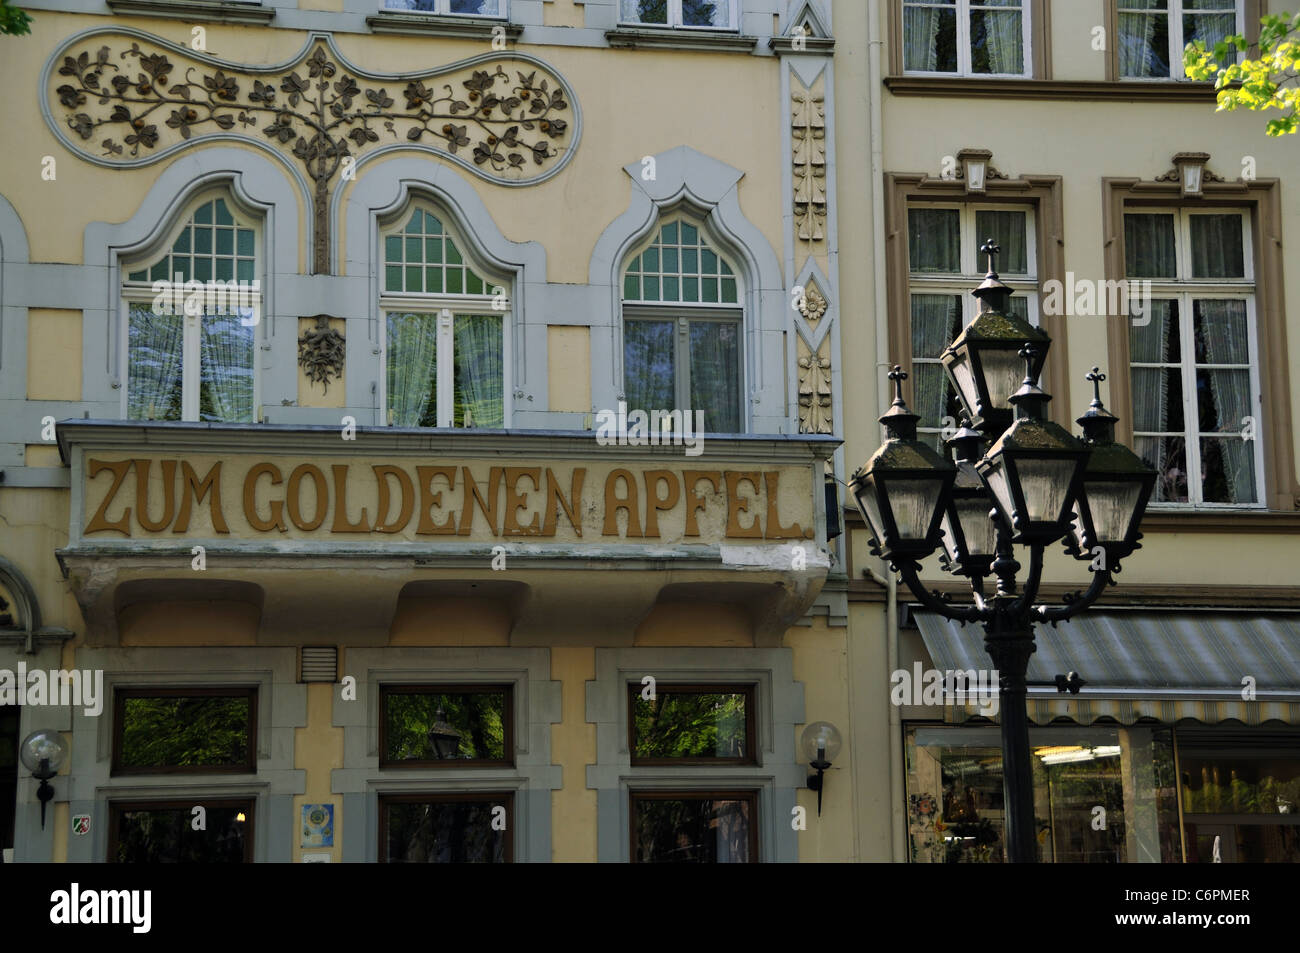 Zum goldenen apfel hi-res stock photography and images - Alamy